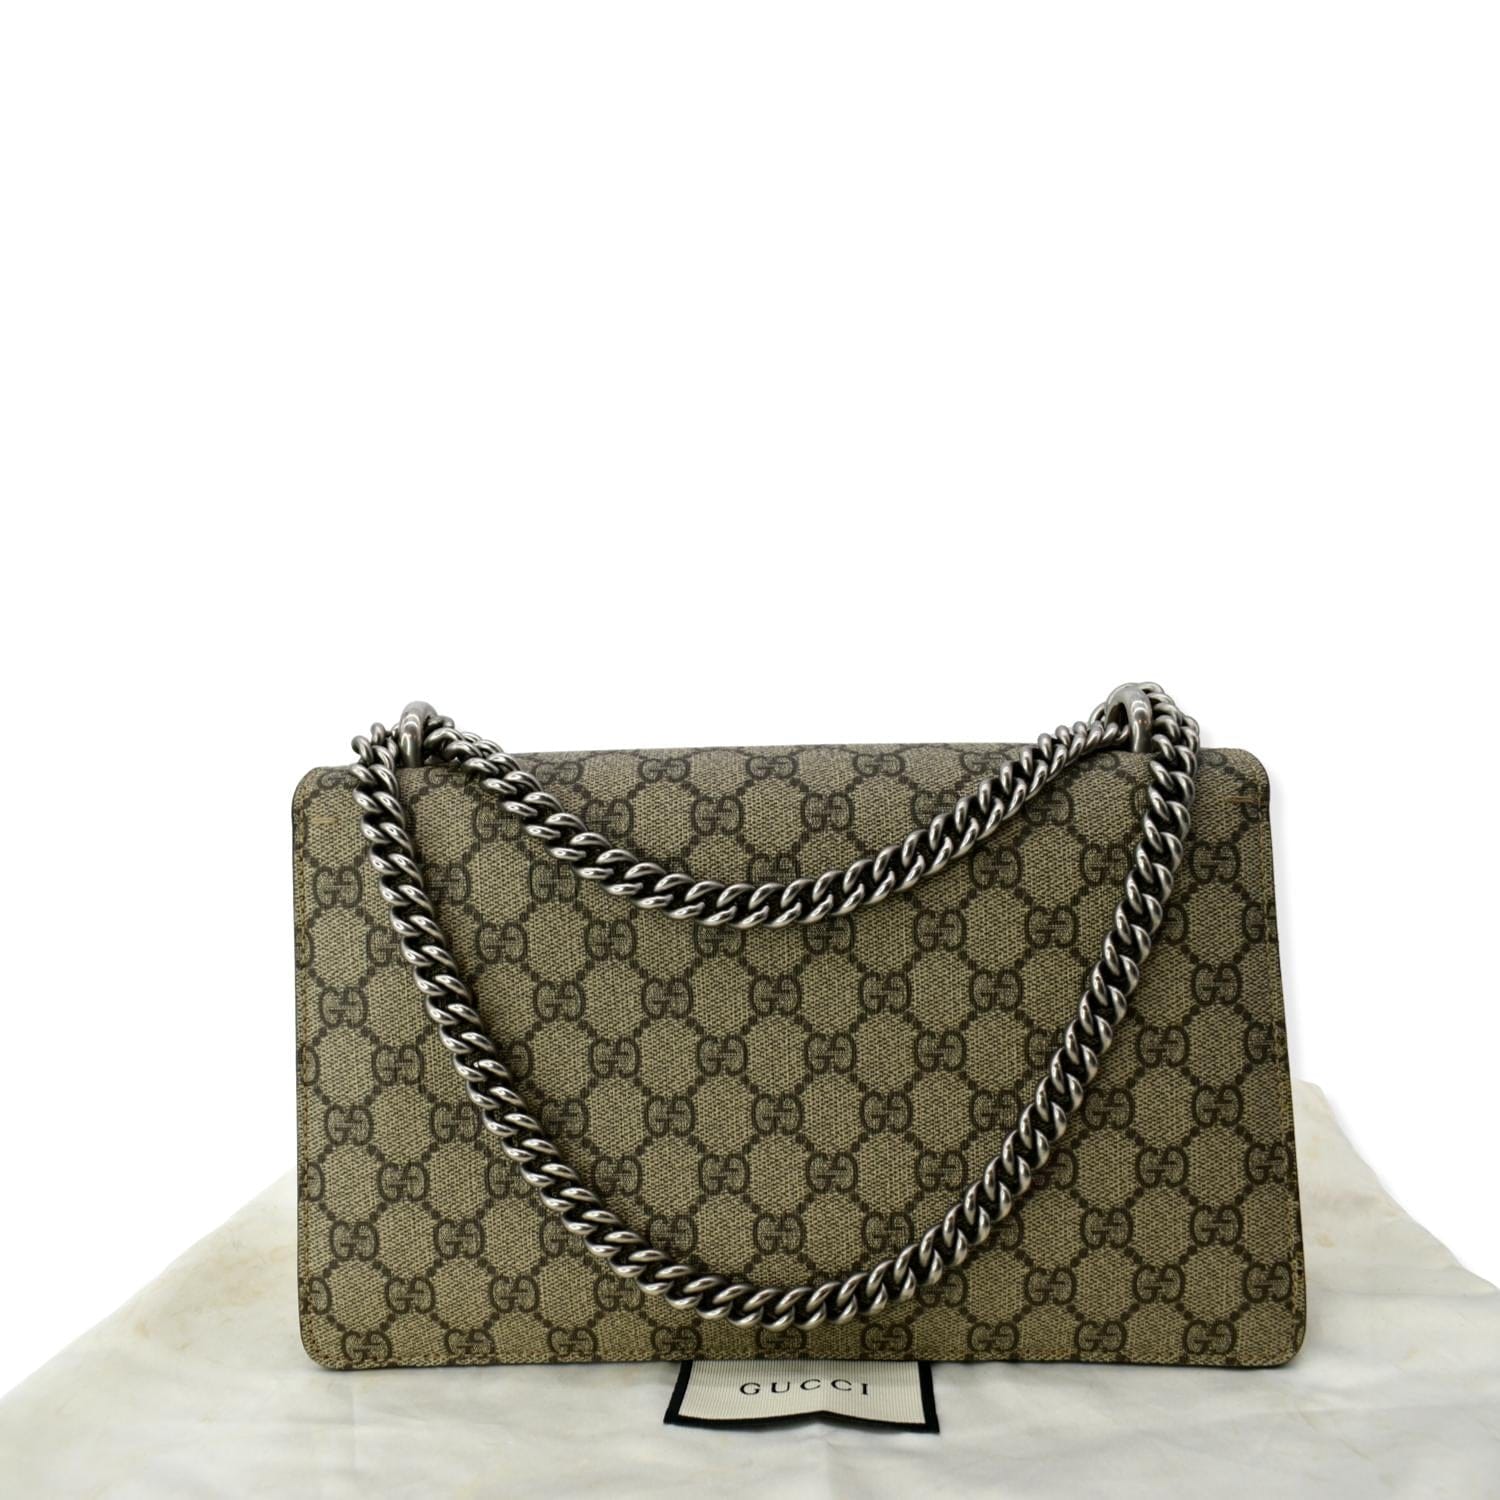 New Gucci Dionysus bag, Size Medium